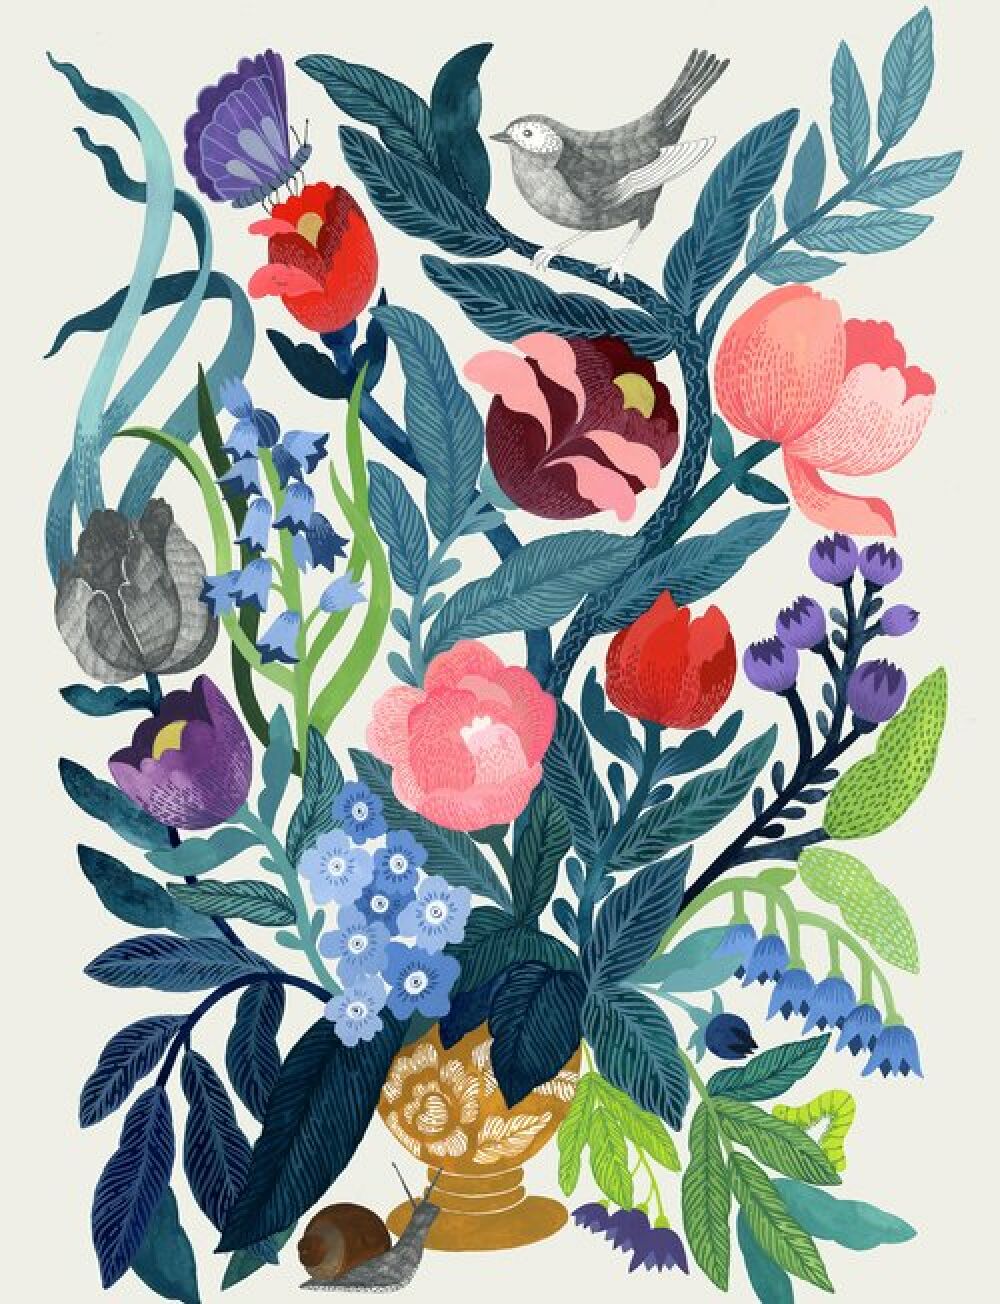 Flowery botanical vintage looking illustration by Malin Gyllensvaan